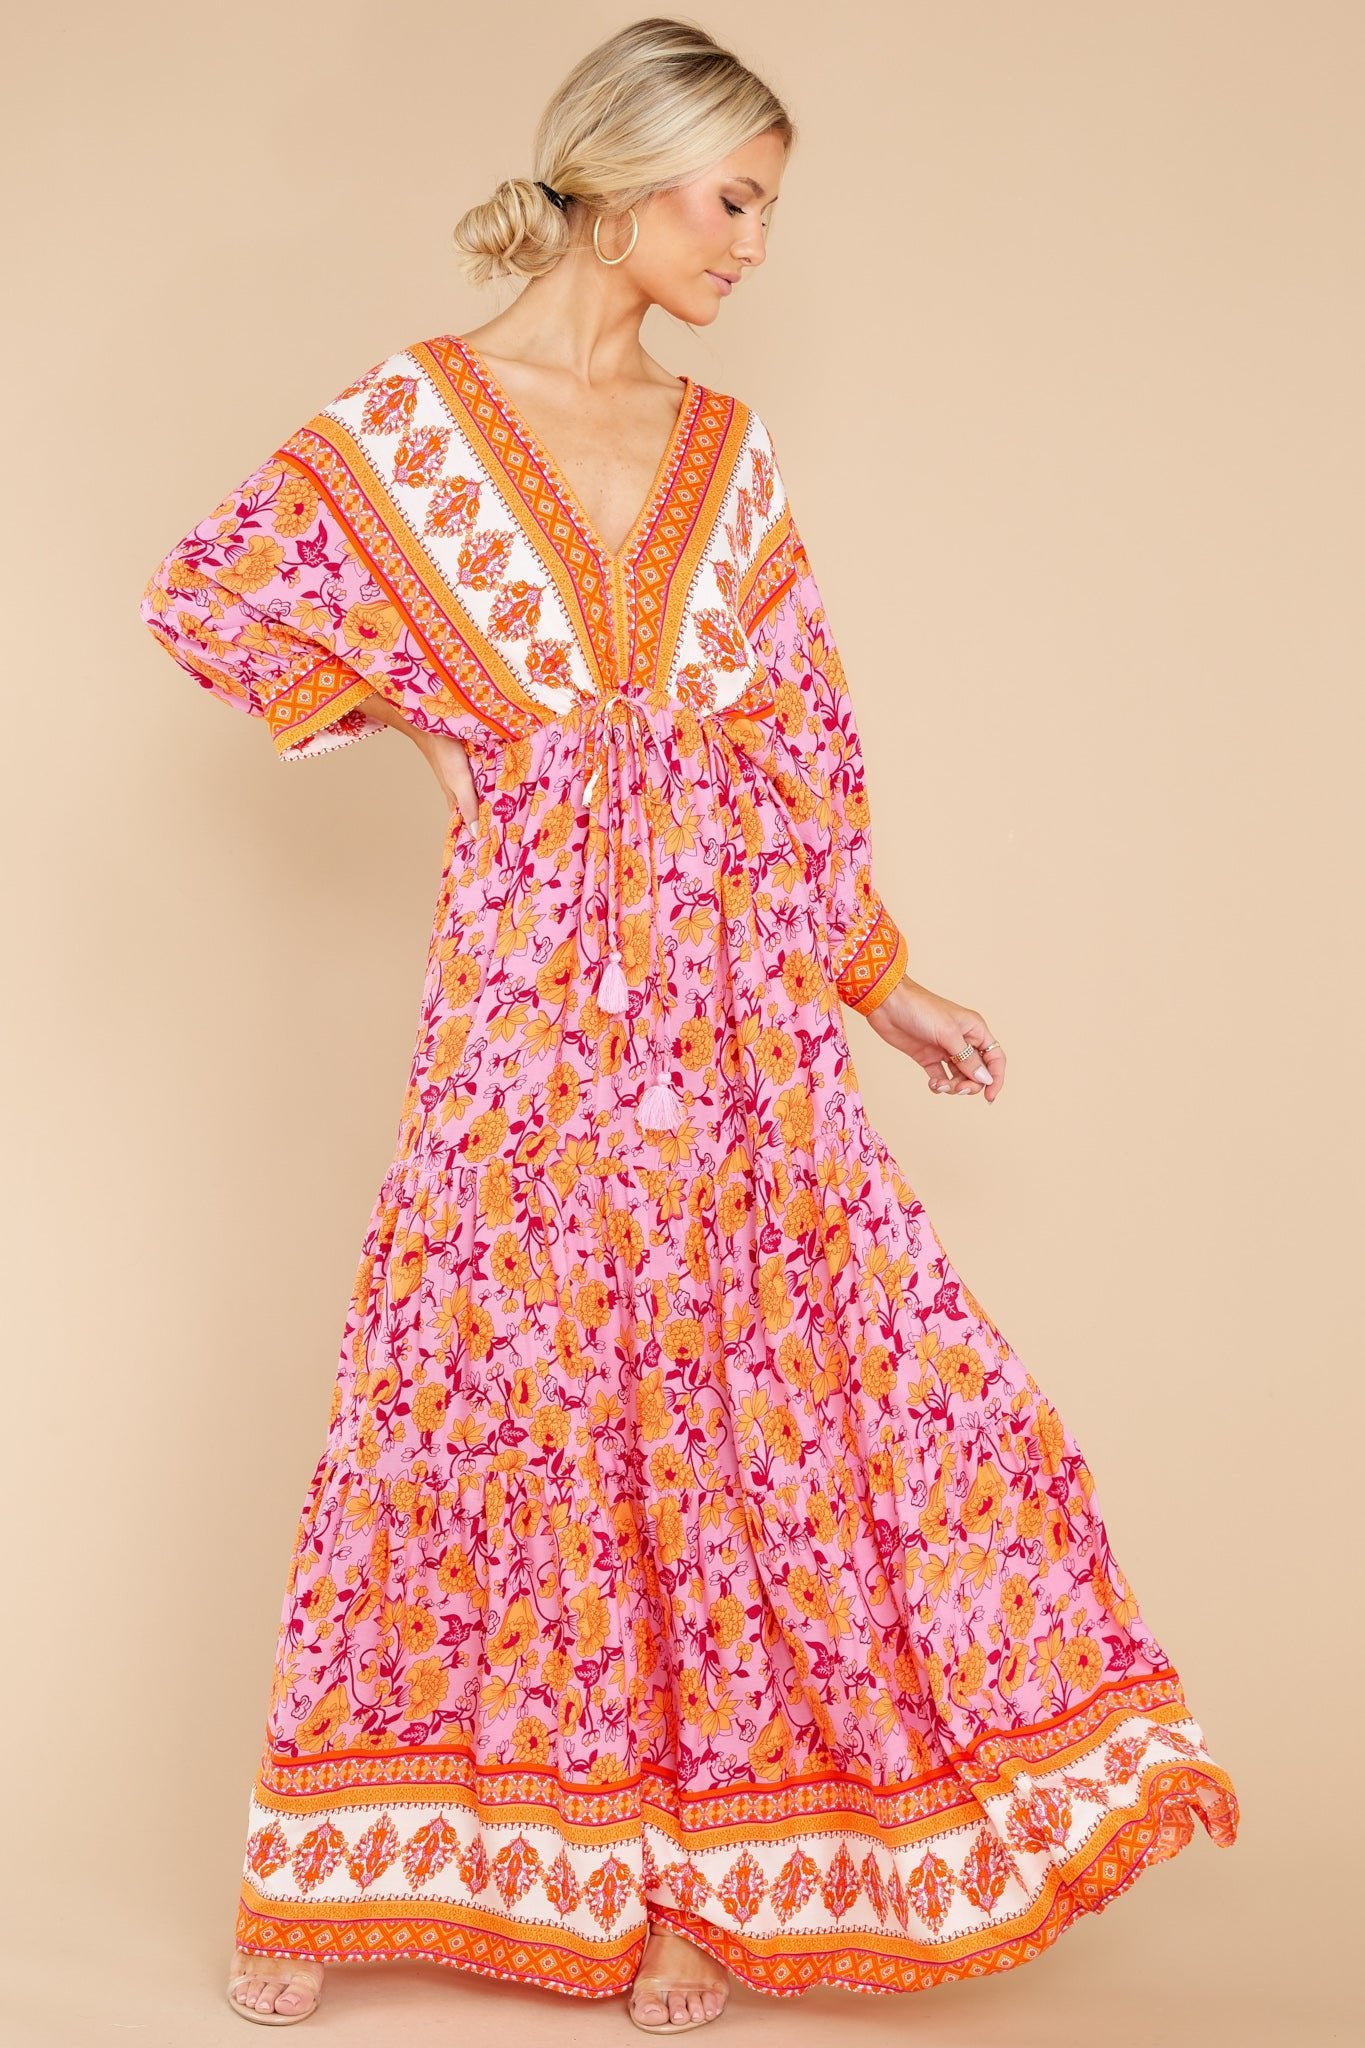 18+ Pink And Orange Maxi Dress